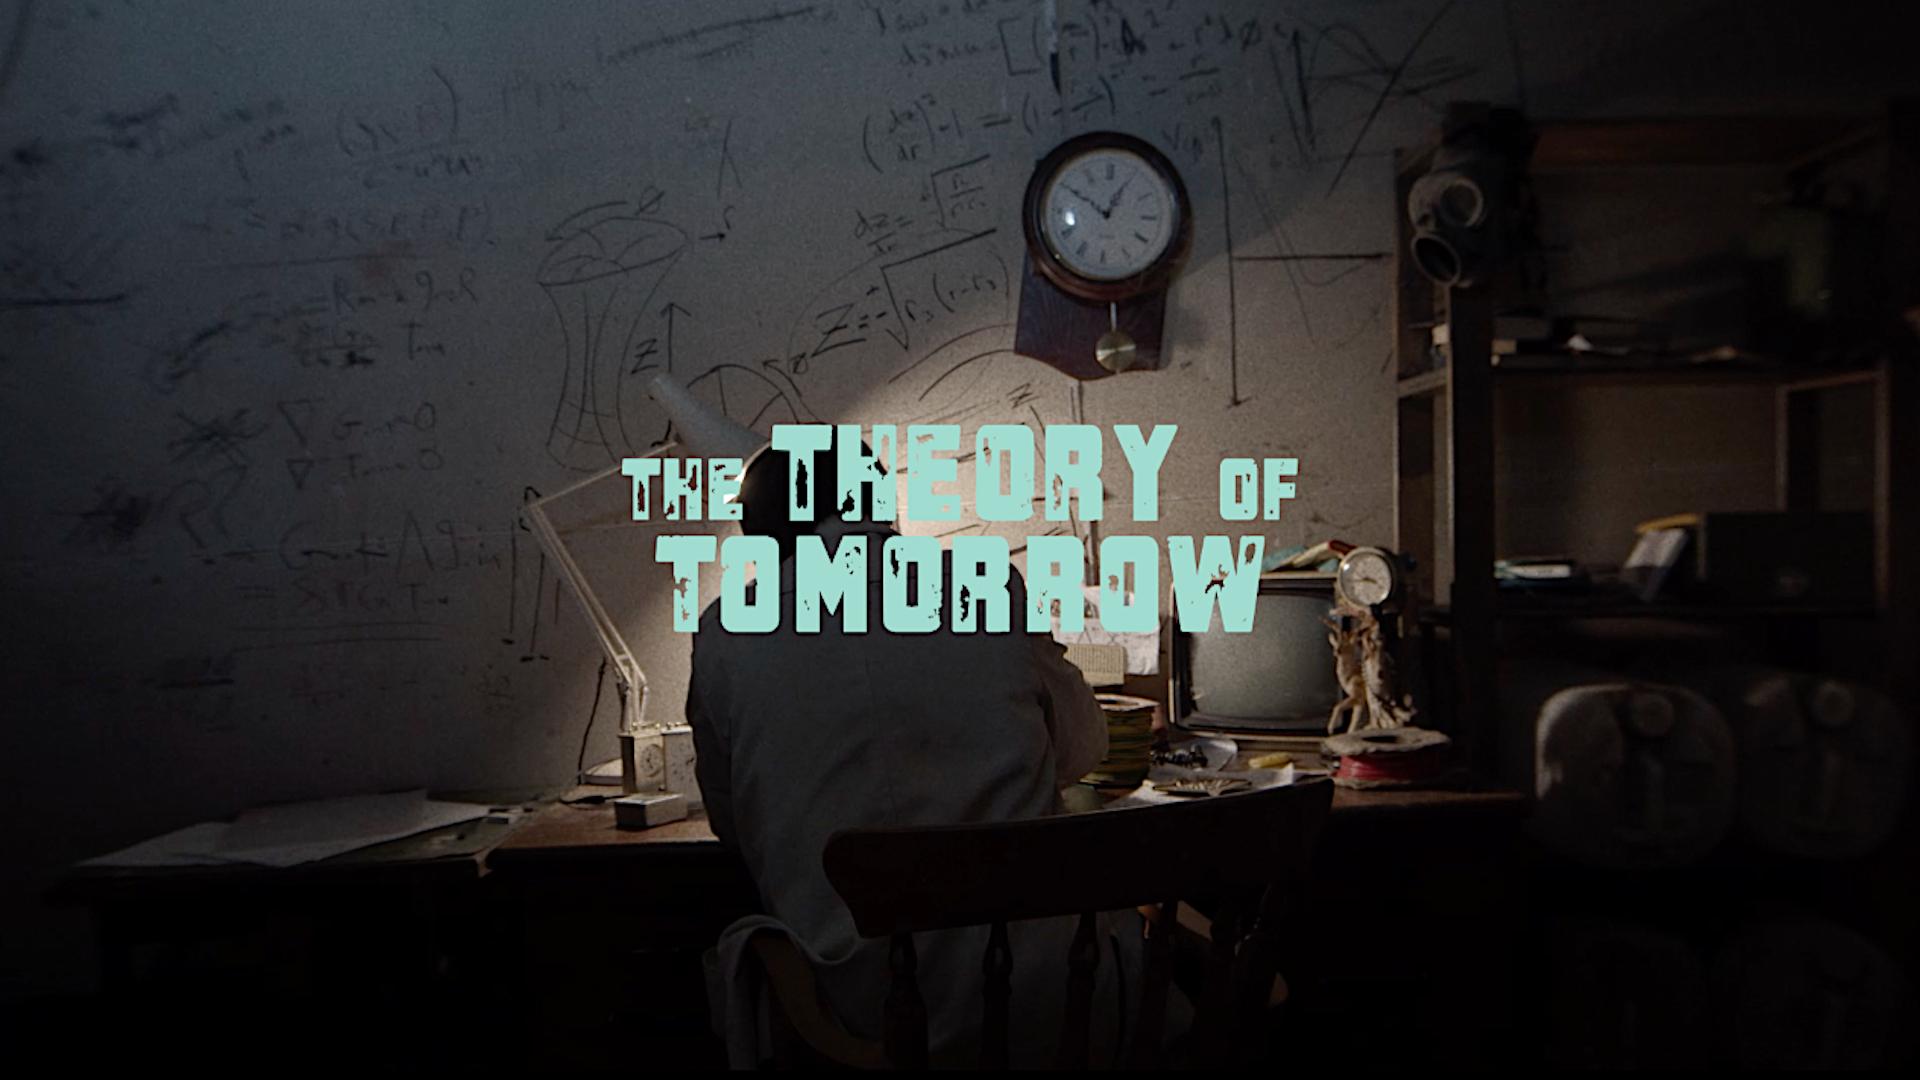 The Theory of Tomorrow